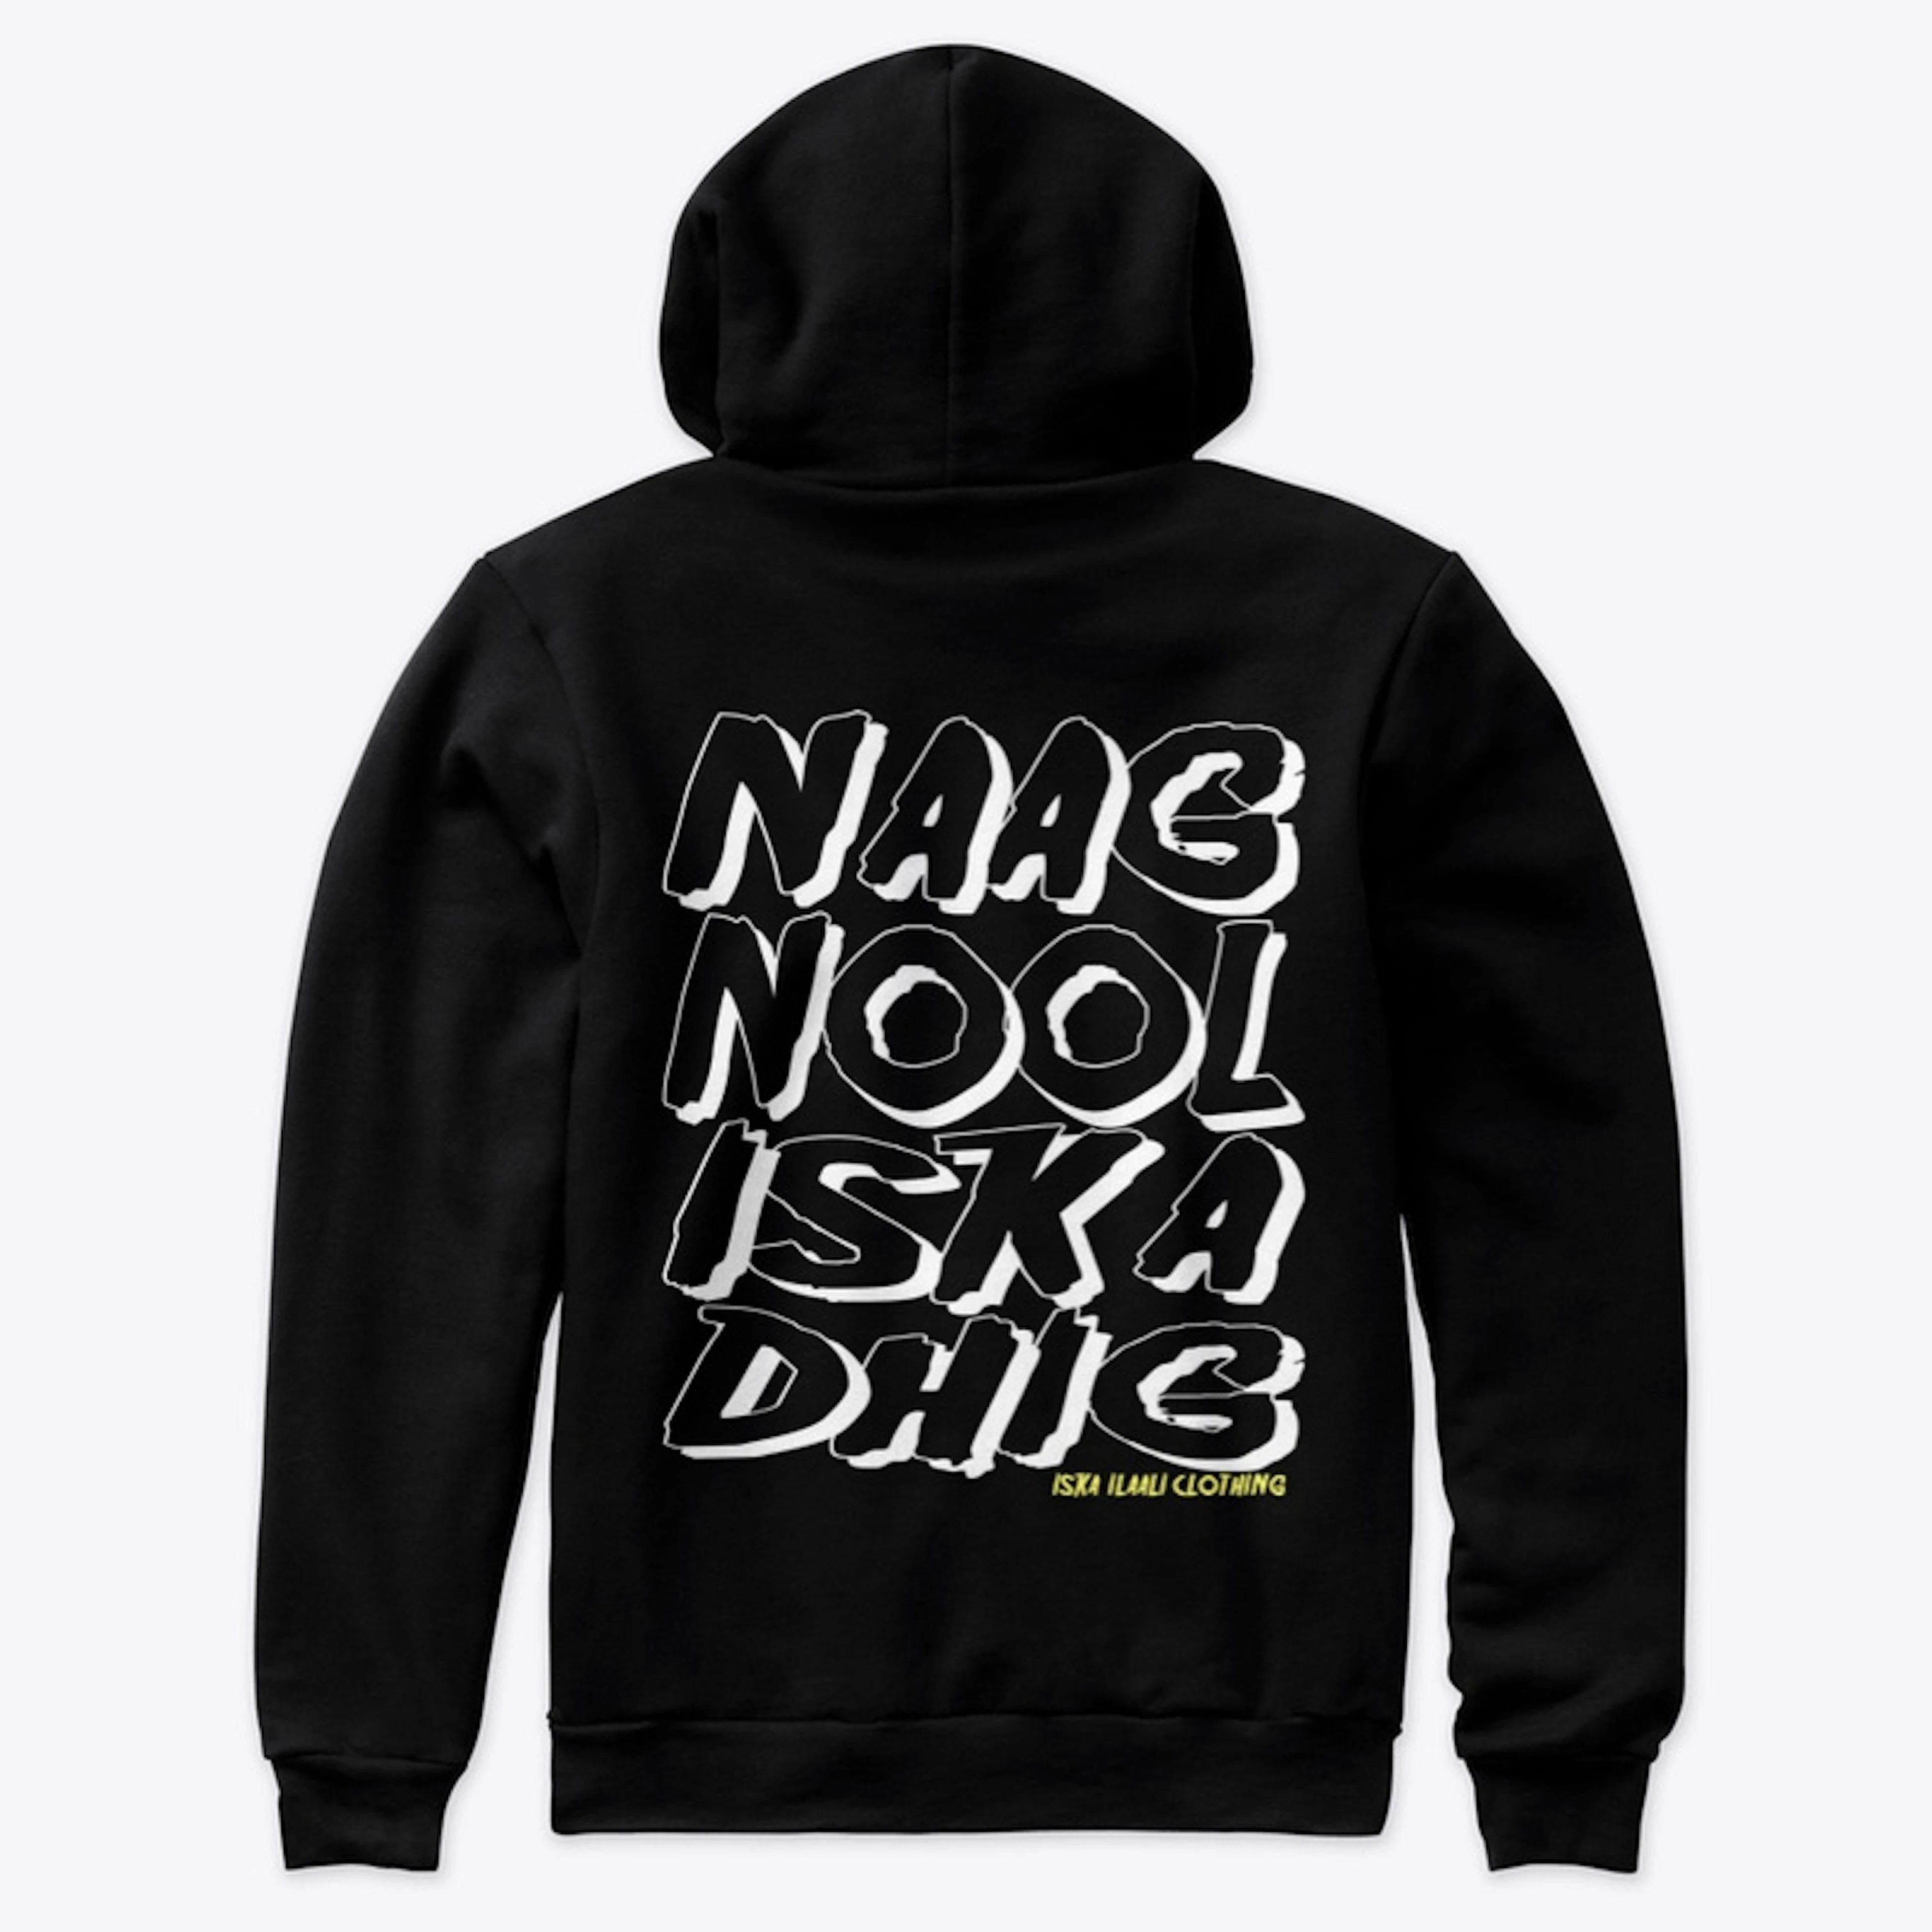 Naag Cool Iska Dhig Pullover hoodie